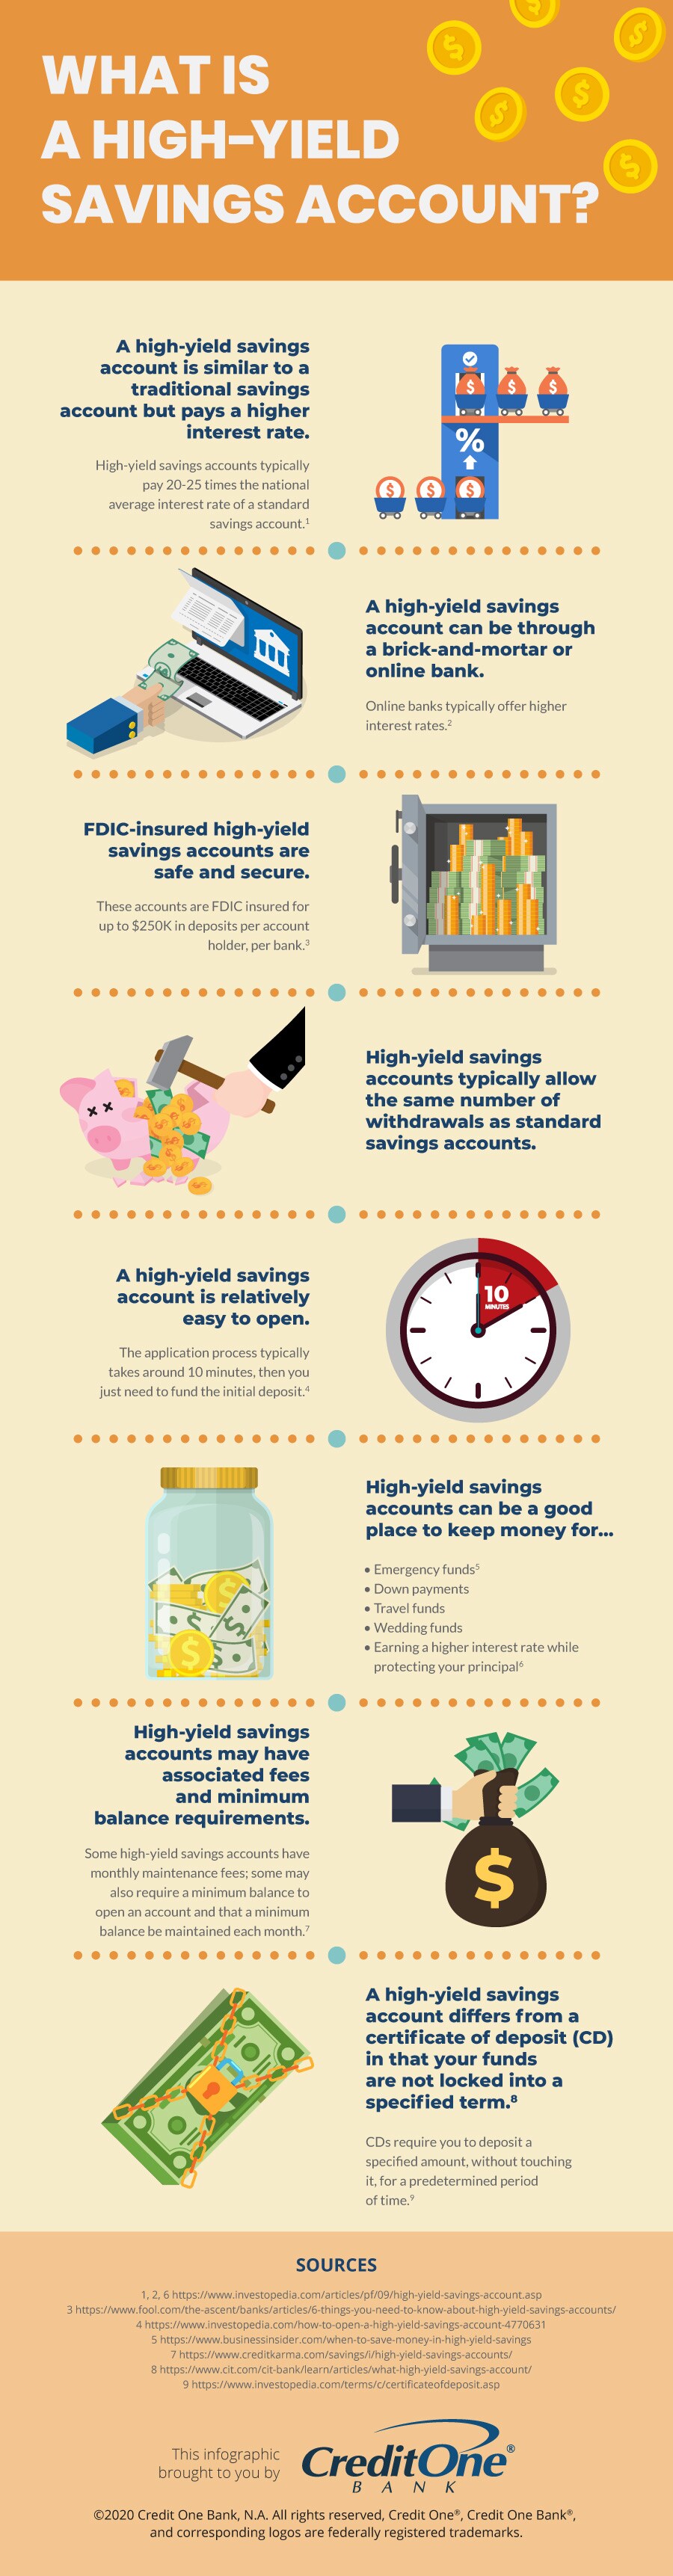 Infographic on high-yield savings accounts